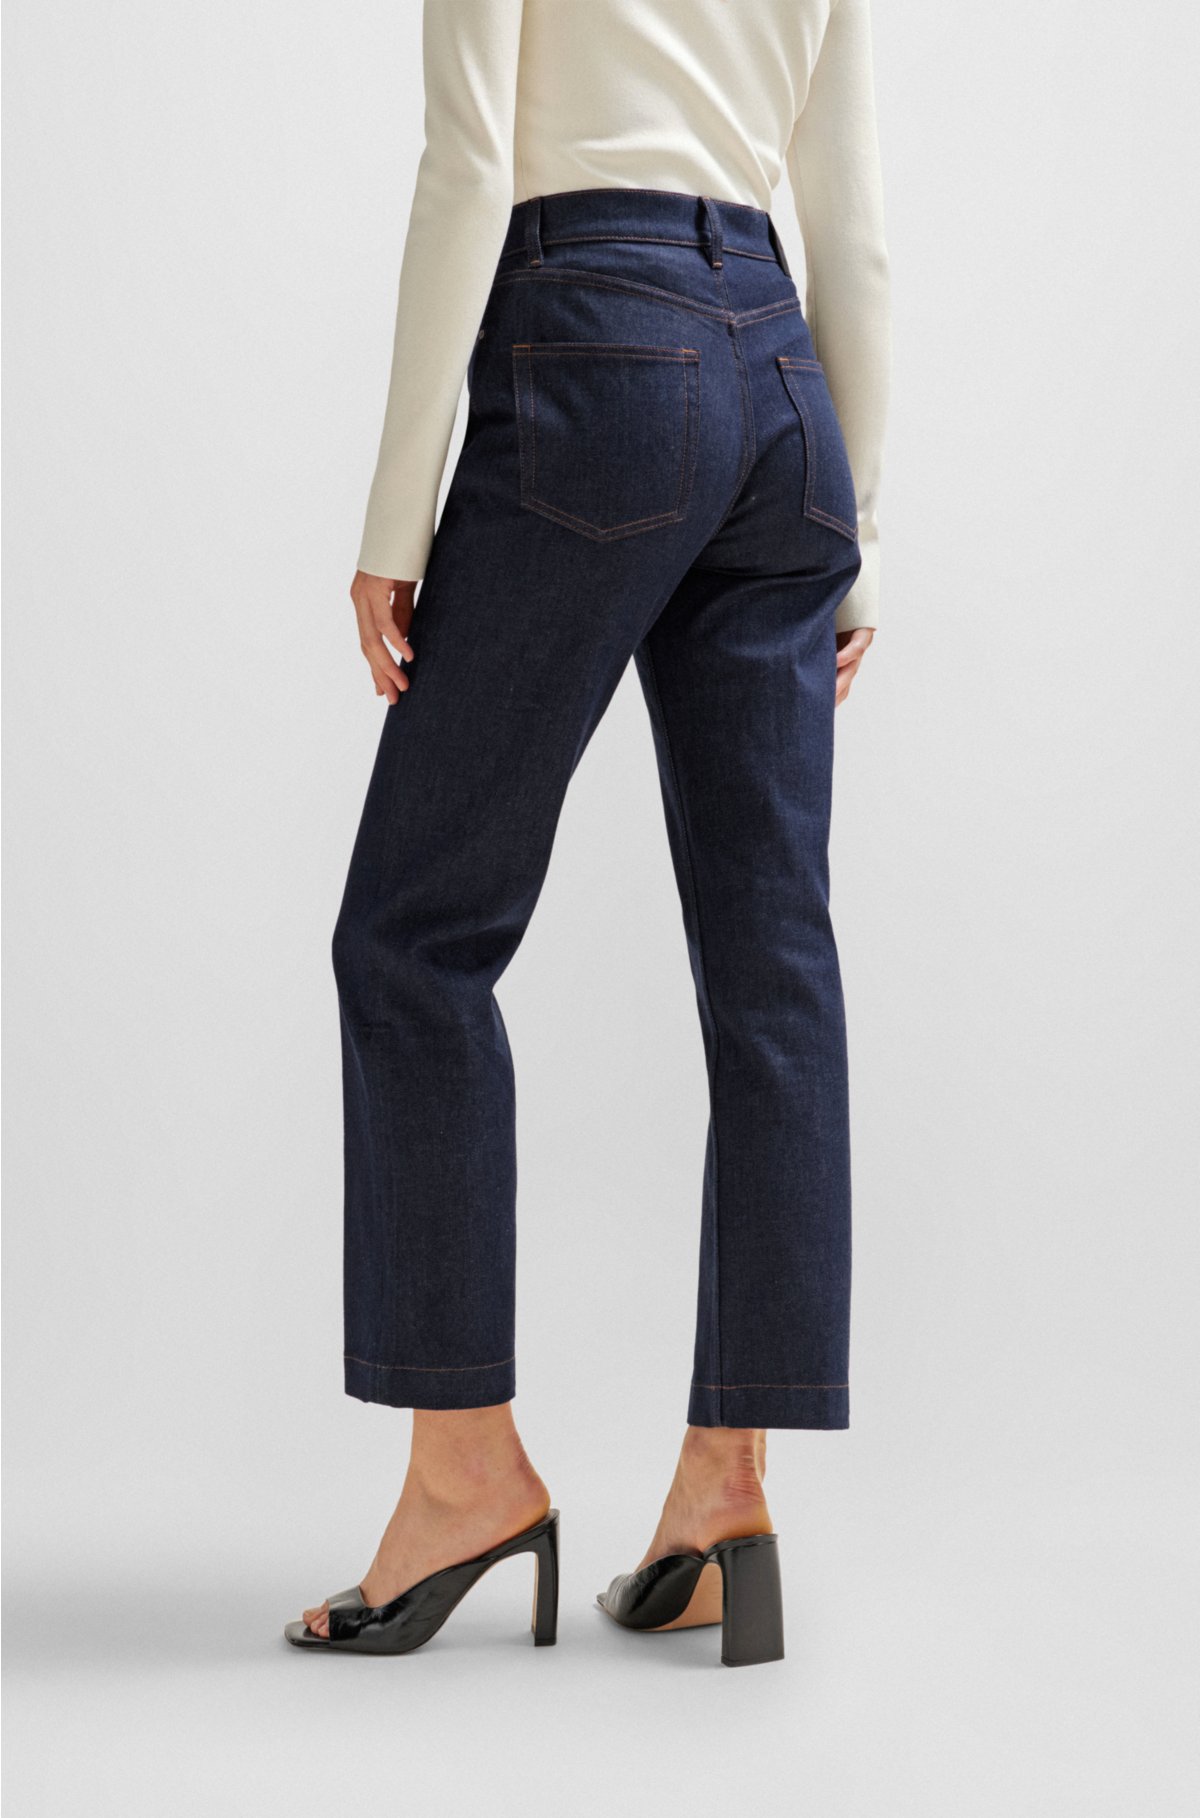 BOSS - Slim-fit jeans in Italian stretch denim with silk